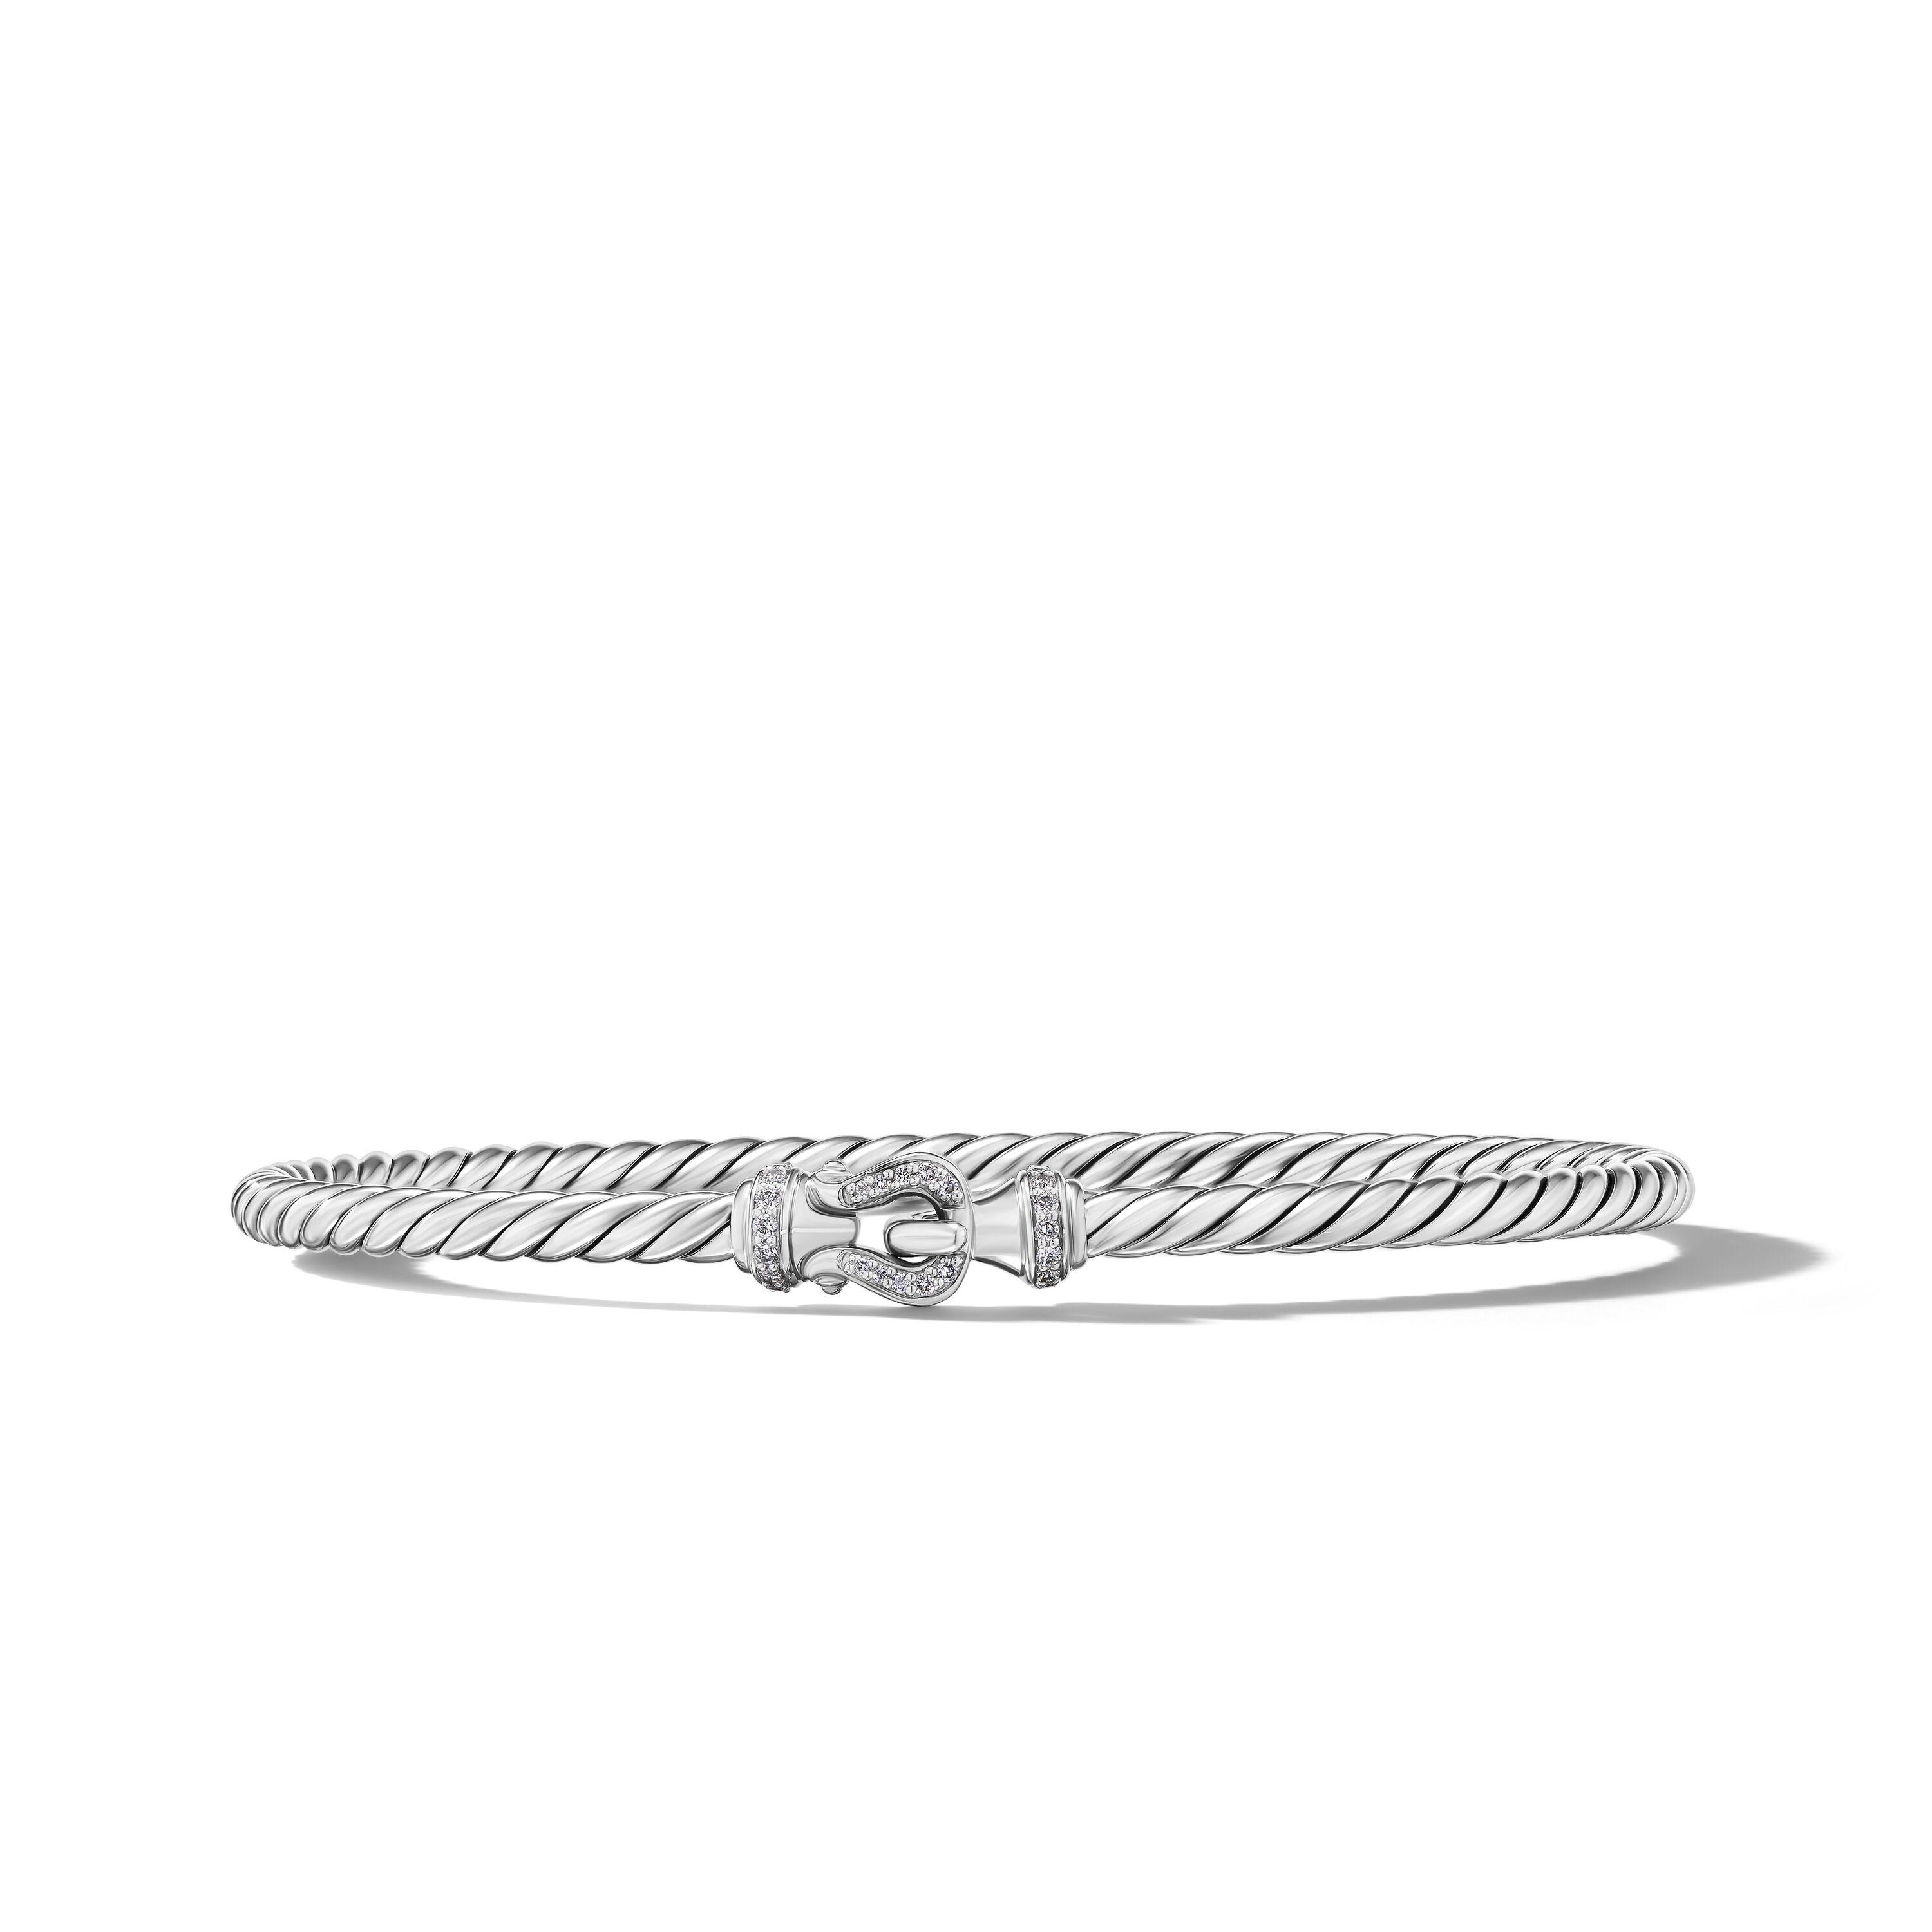 David Yurman 3mm Buckle Bracelet in Sterling Silver with Diamonds, Size Small